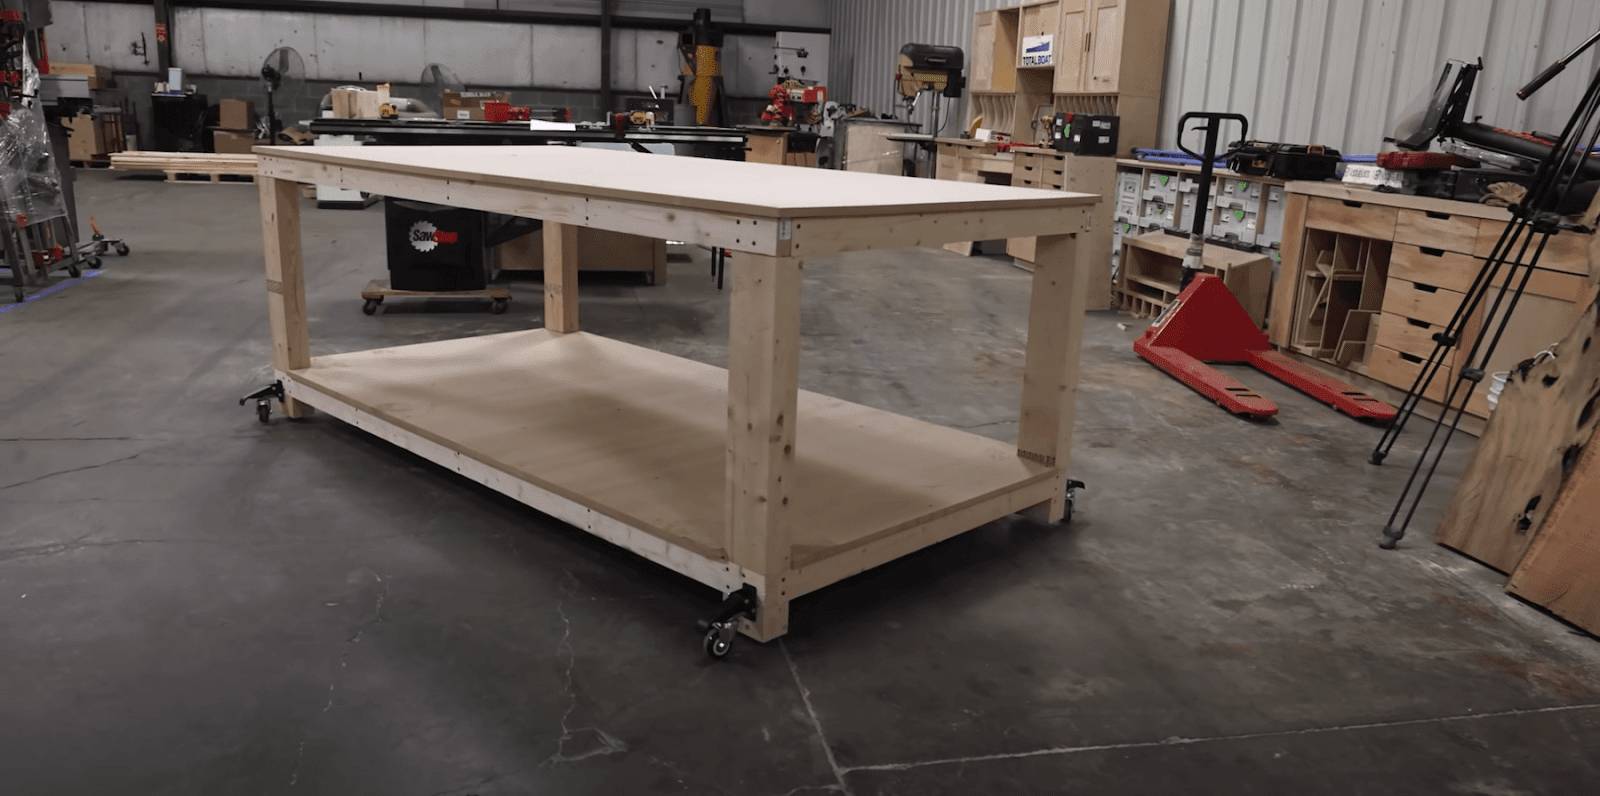 DIY Workbench / Work Table